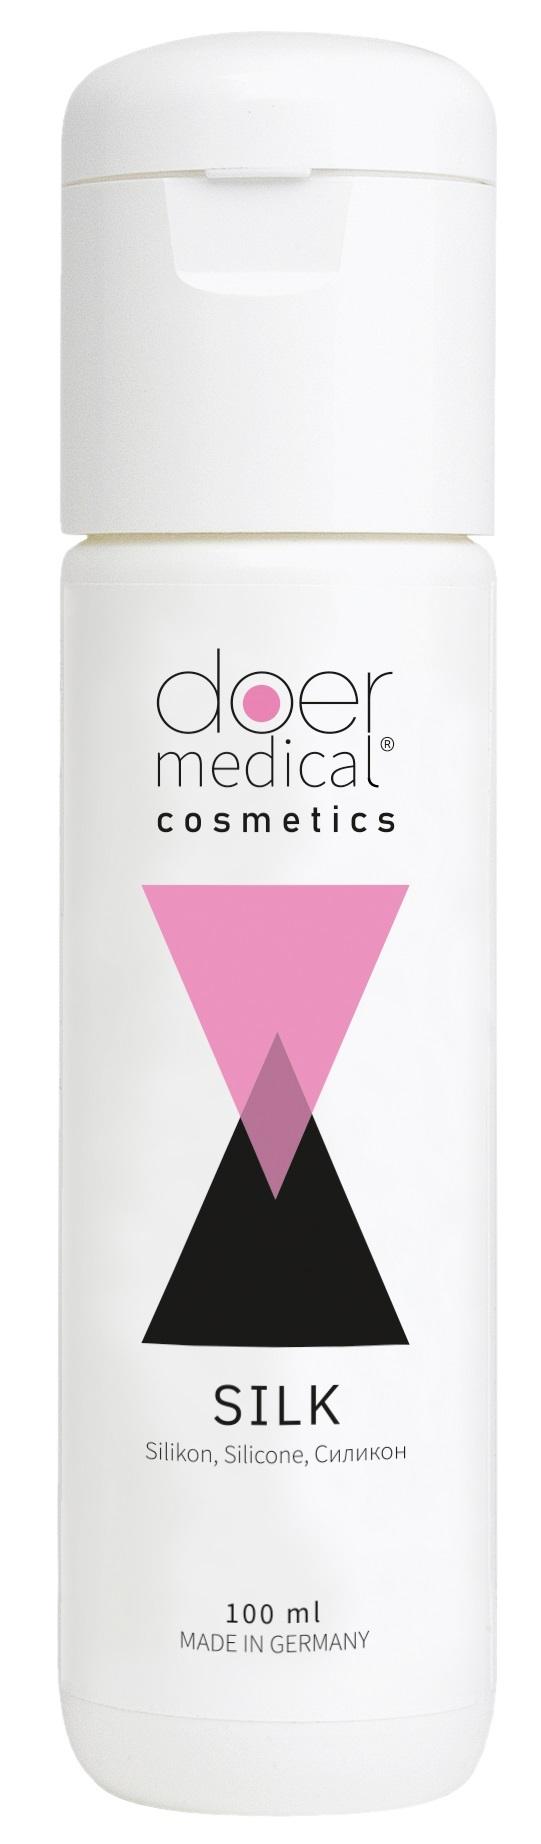 Doer Medical Cosmetics Silikonový lubrikační gel 100 ml Doer Medical Cosmetics